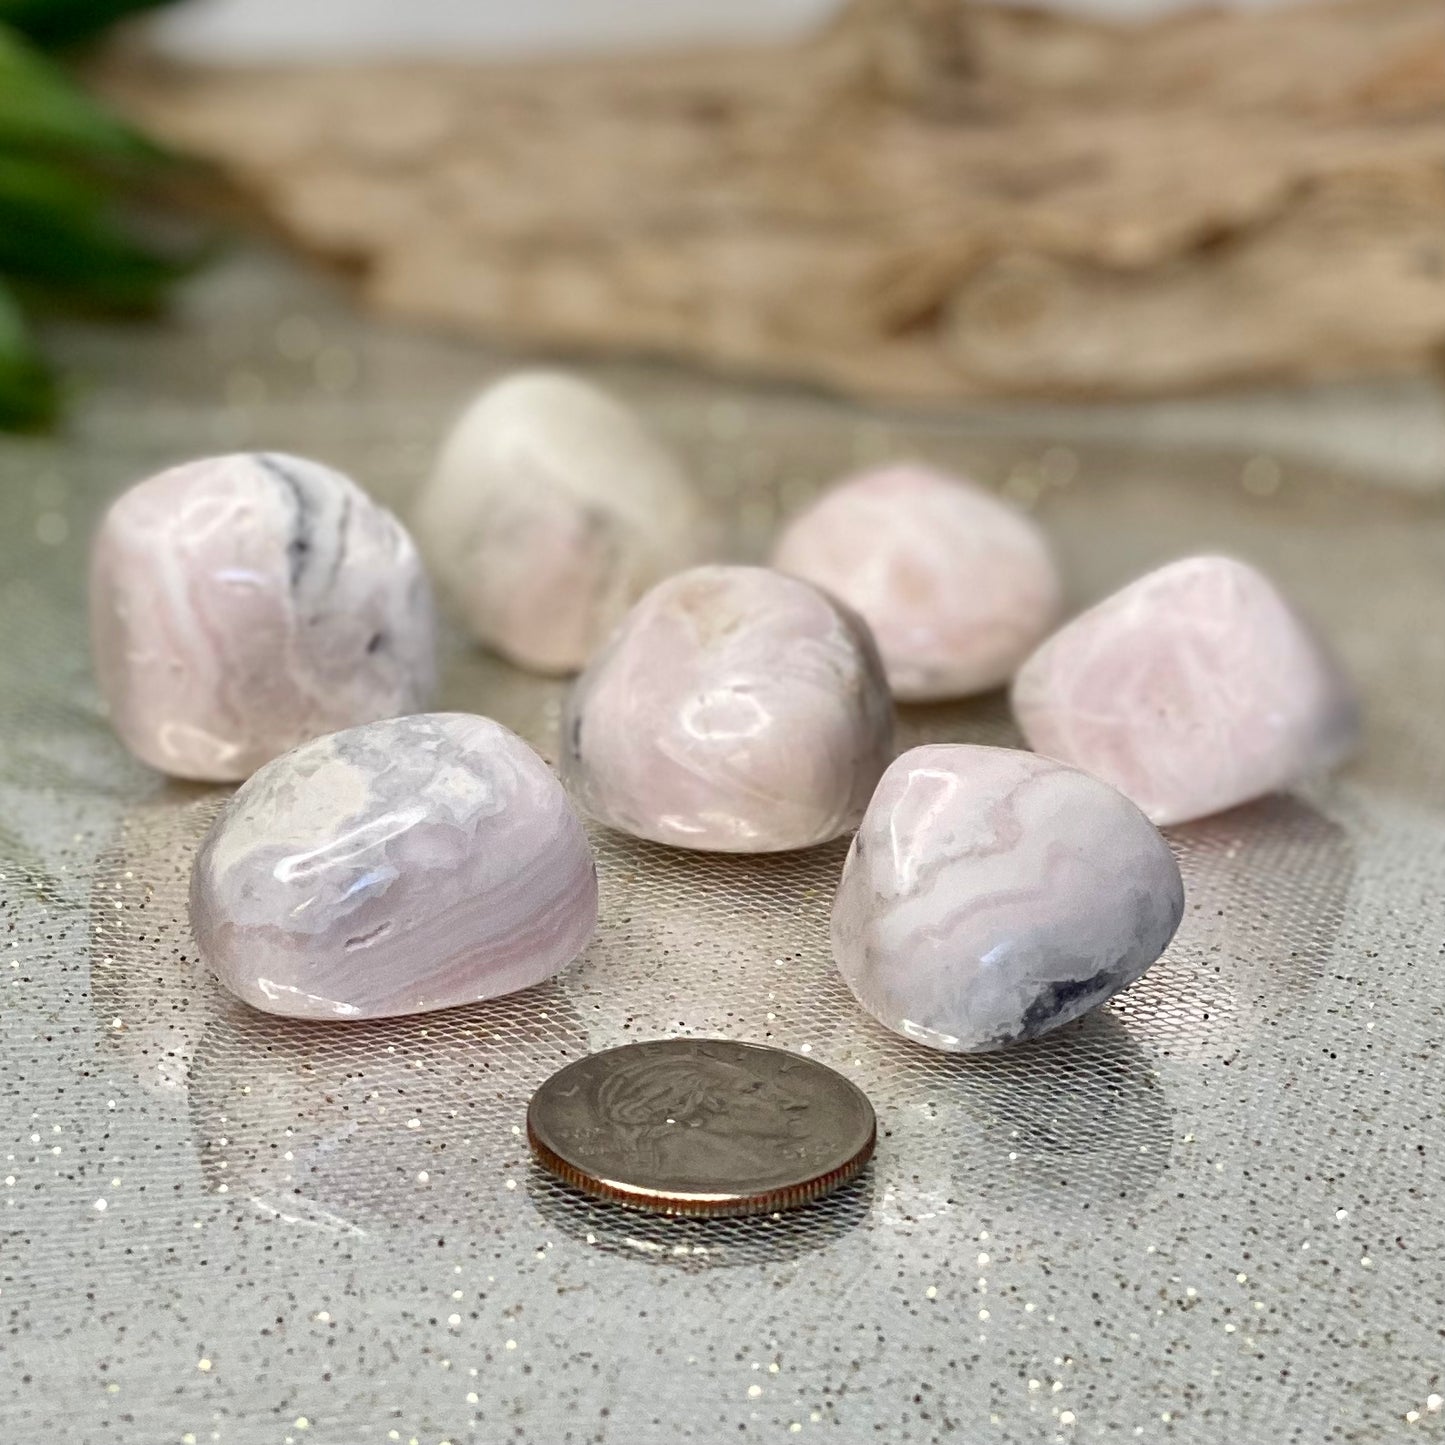 Mangano Calcite Tumbled Stone - Nurturing Pink Crystal for Heart Healing